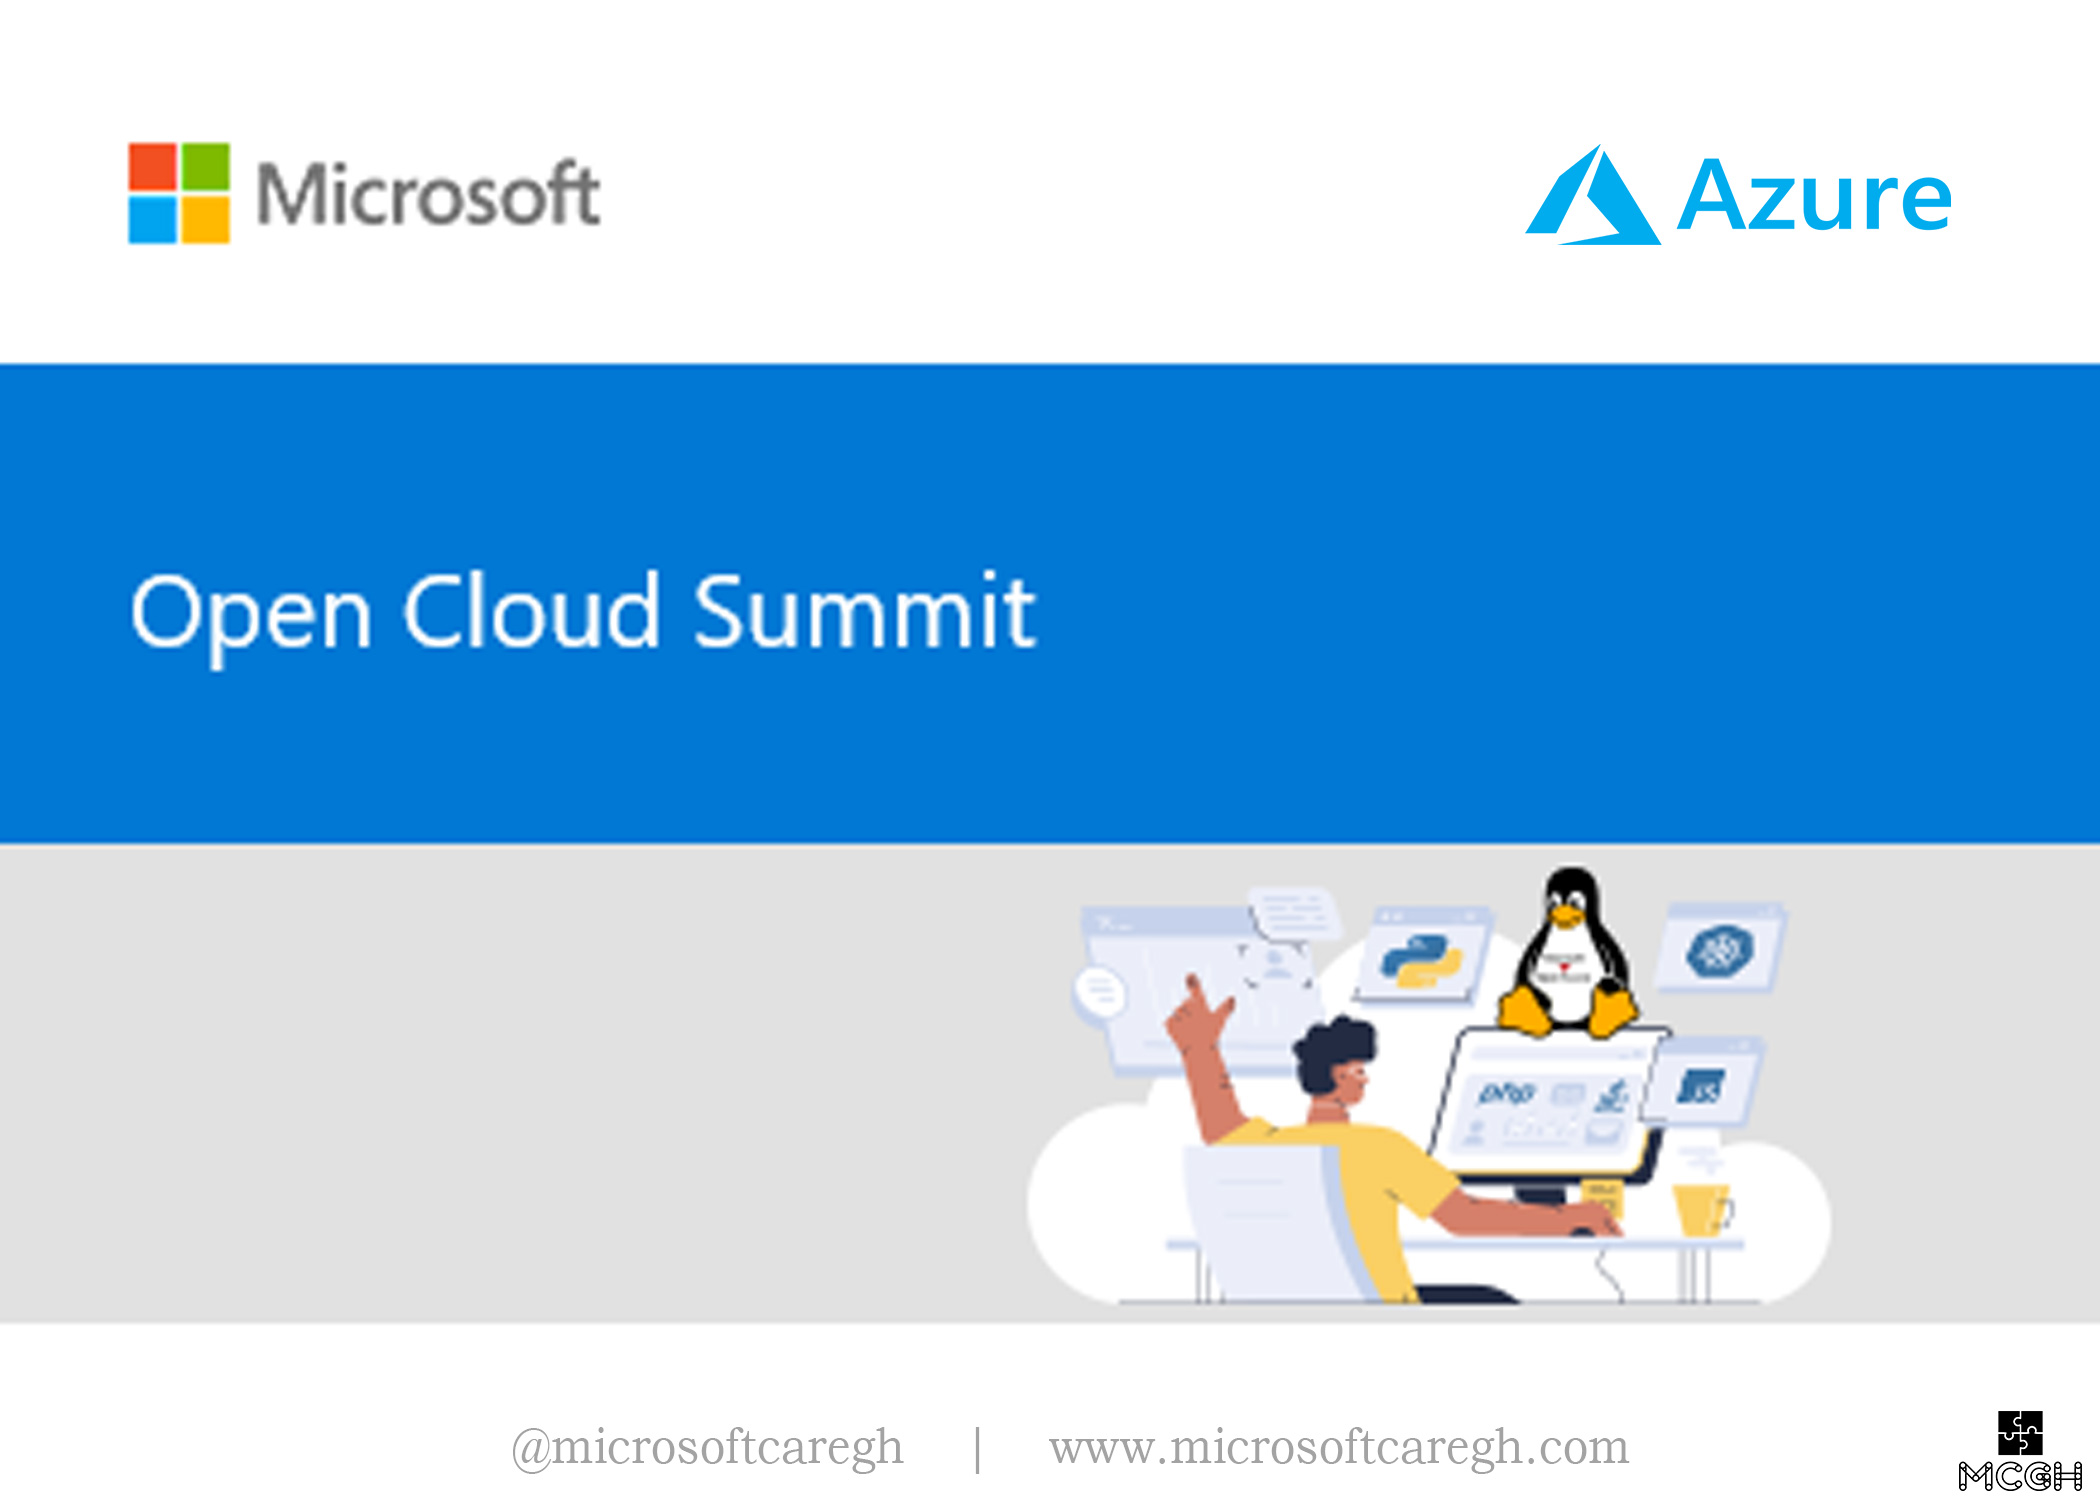 Microsoft Open Cloud Summit, Johannesburg